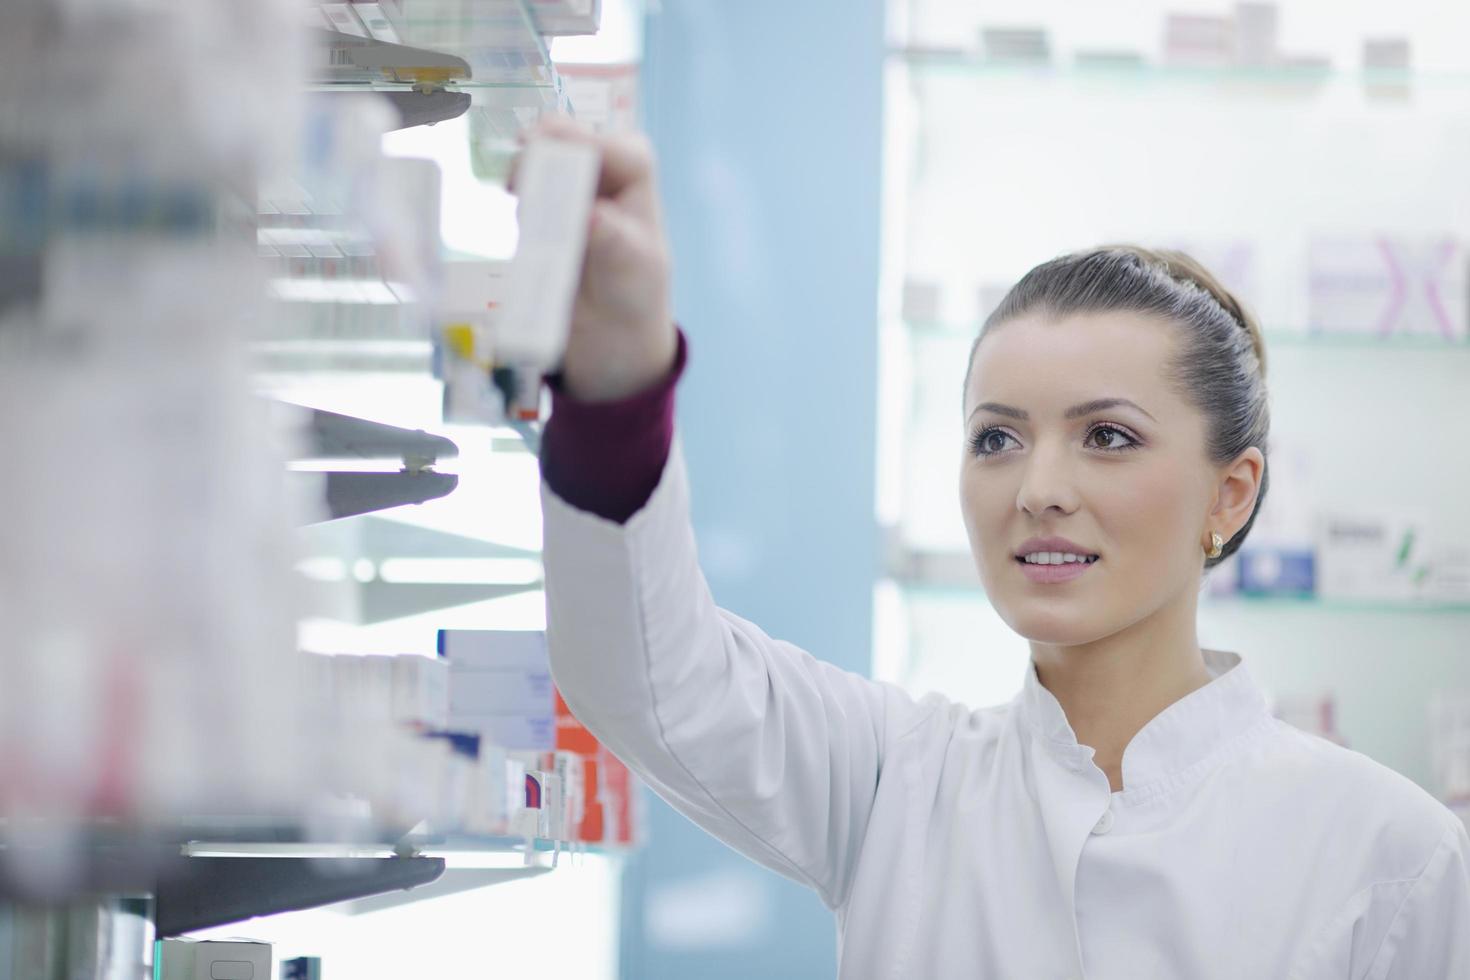 pharmacist chemist woman standing in pharmacy drugstore photo